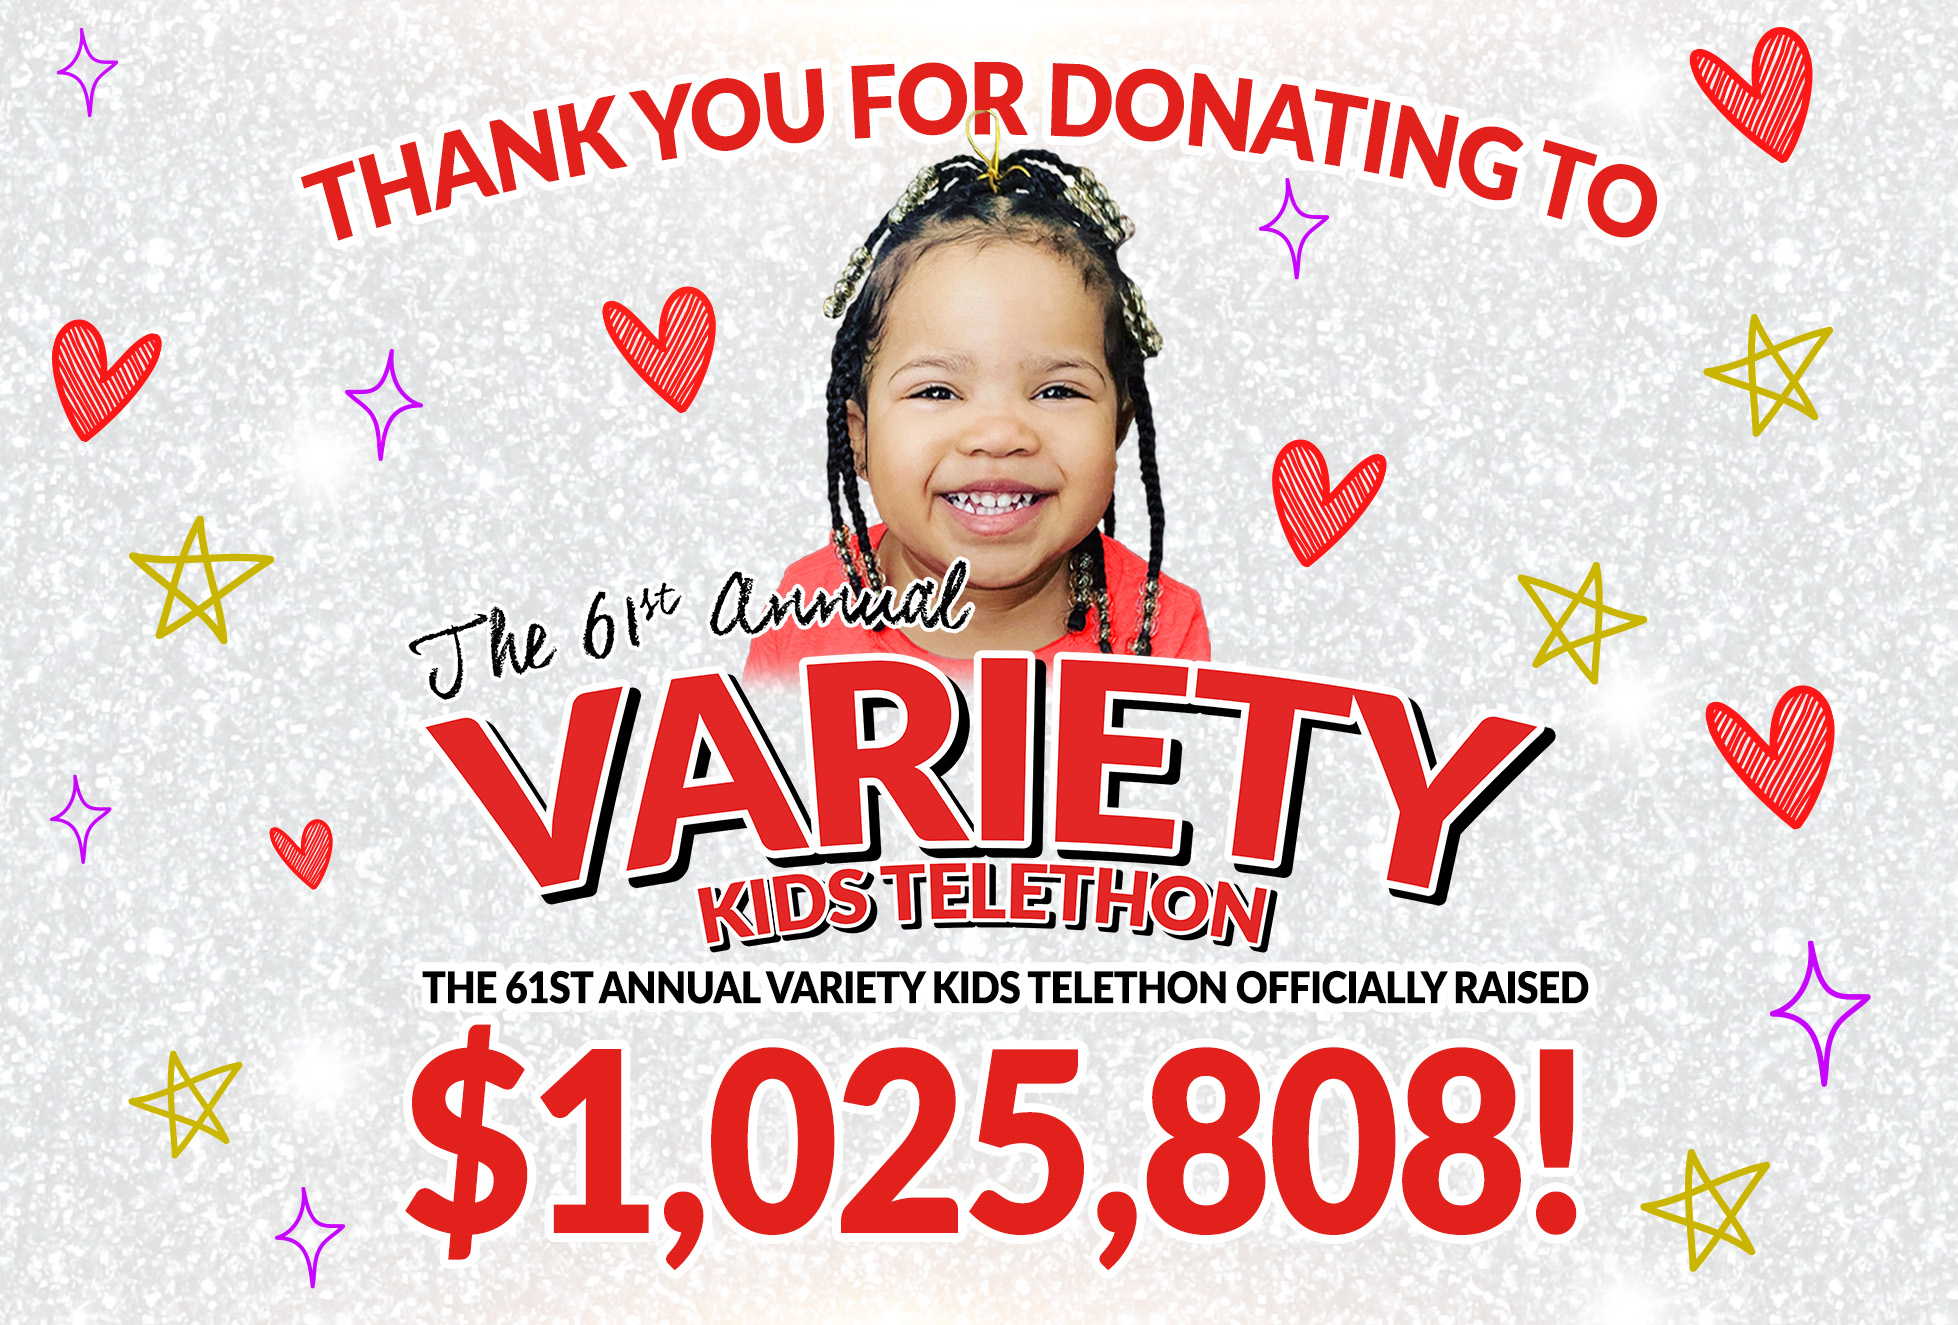 The 61st Annual Variety Kids Telethon Raised $1,025,808!